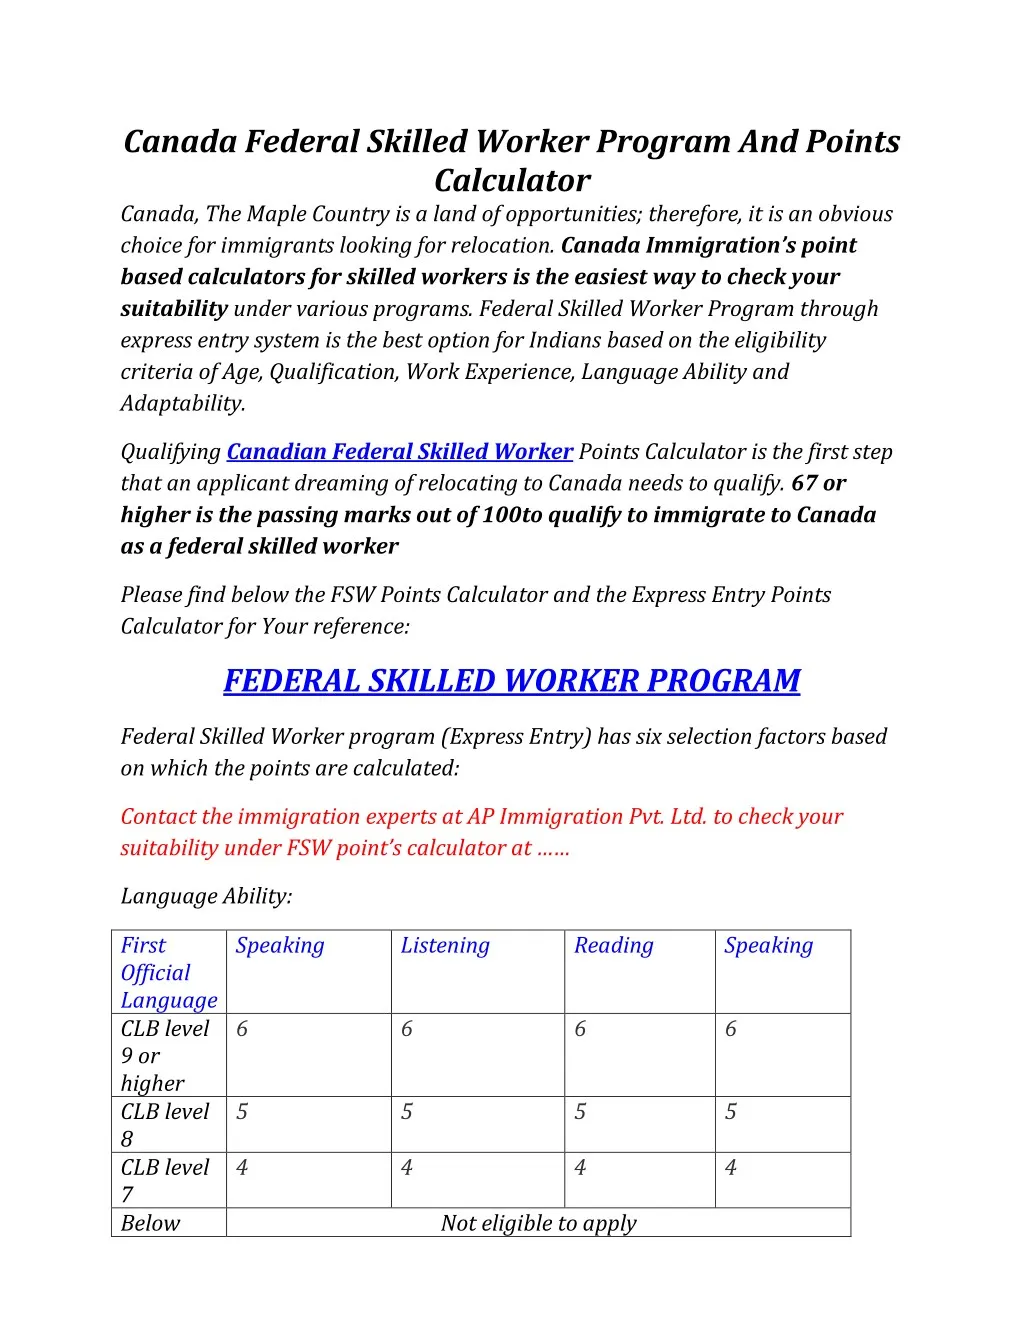 Federal skilled worker calculator